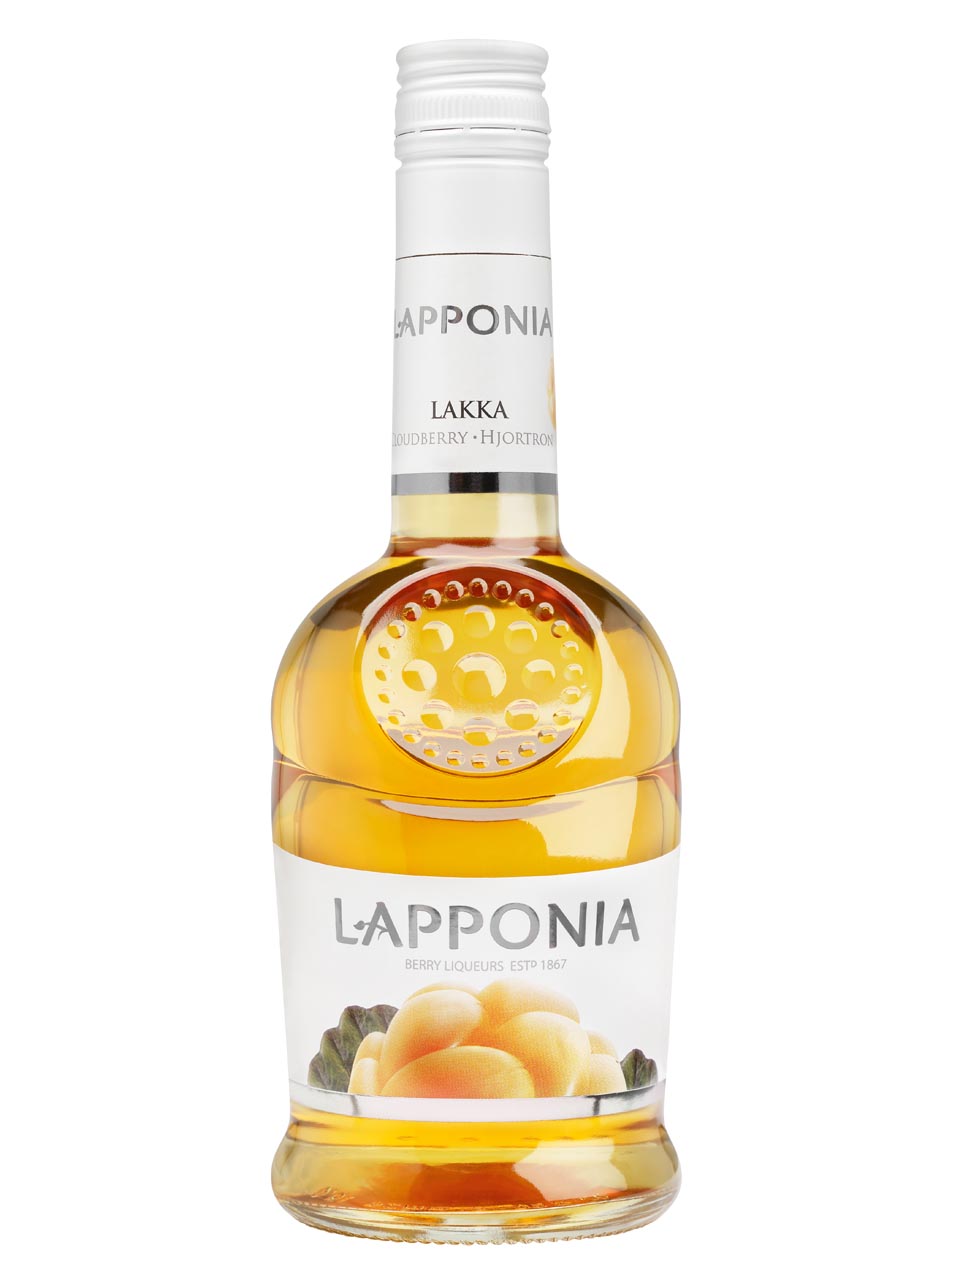 Lapponia Lakka Cloudberry Finnish Fruit Liqueur 21% 0.5L null - onesize - 1